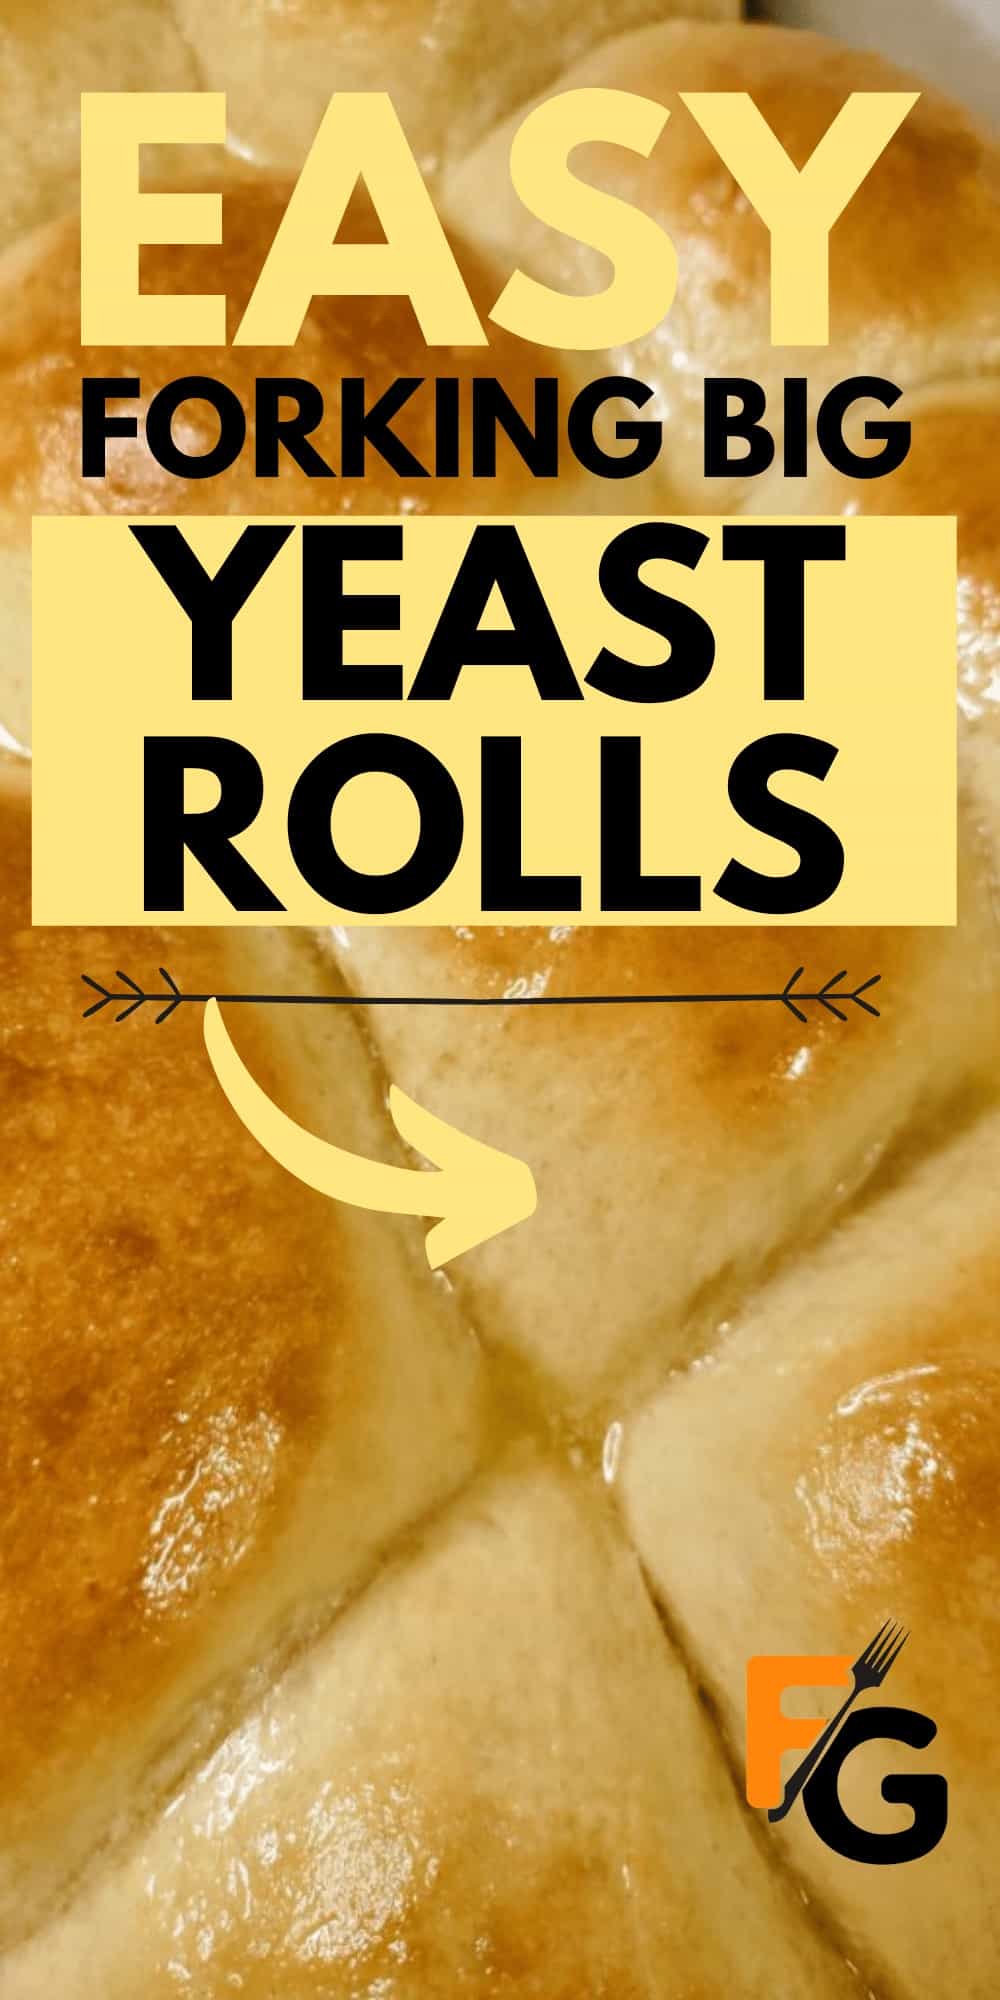 BIG Forking Yeast Rolls